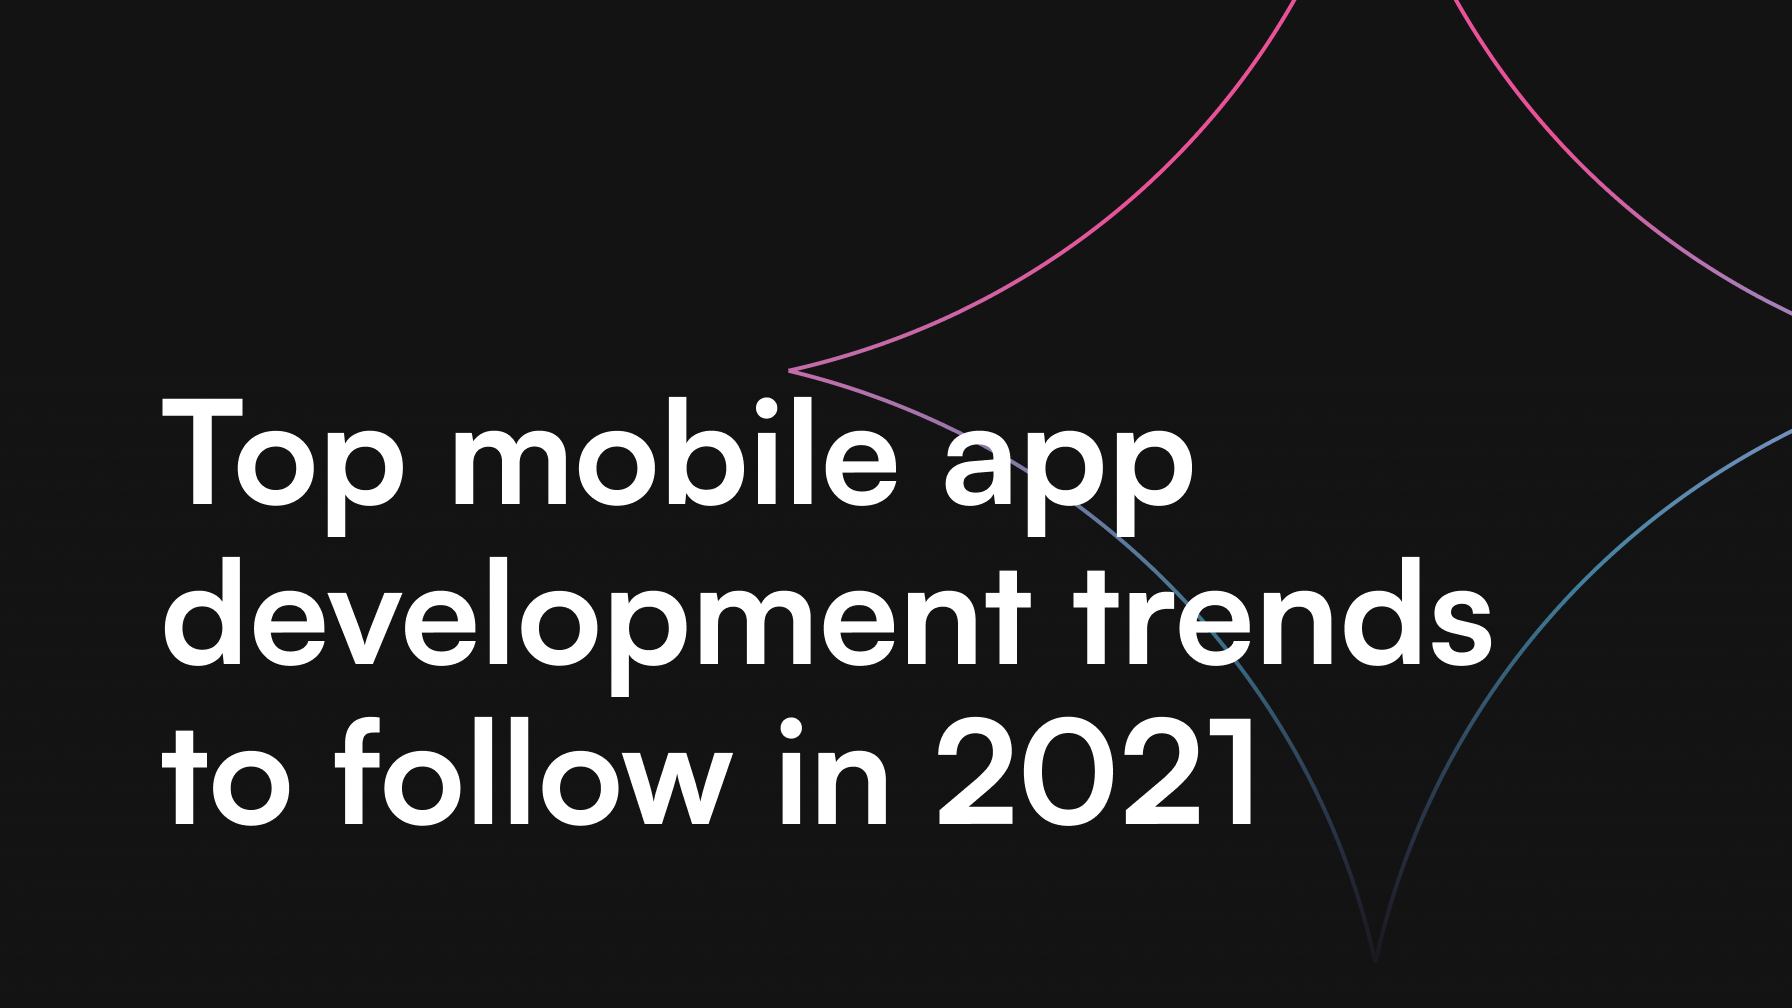 Top mobile app development trends to follow in 2021